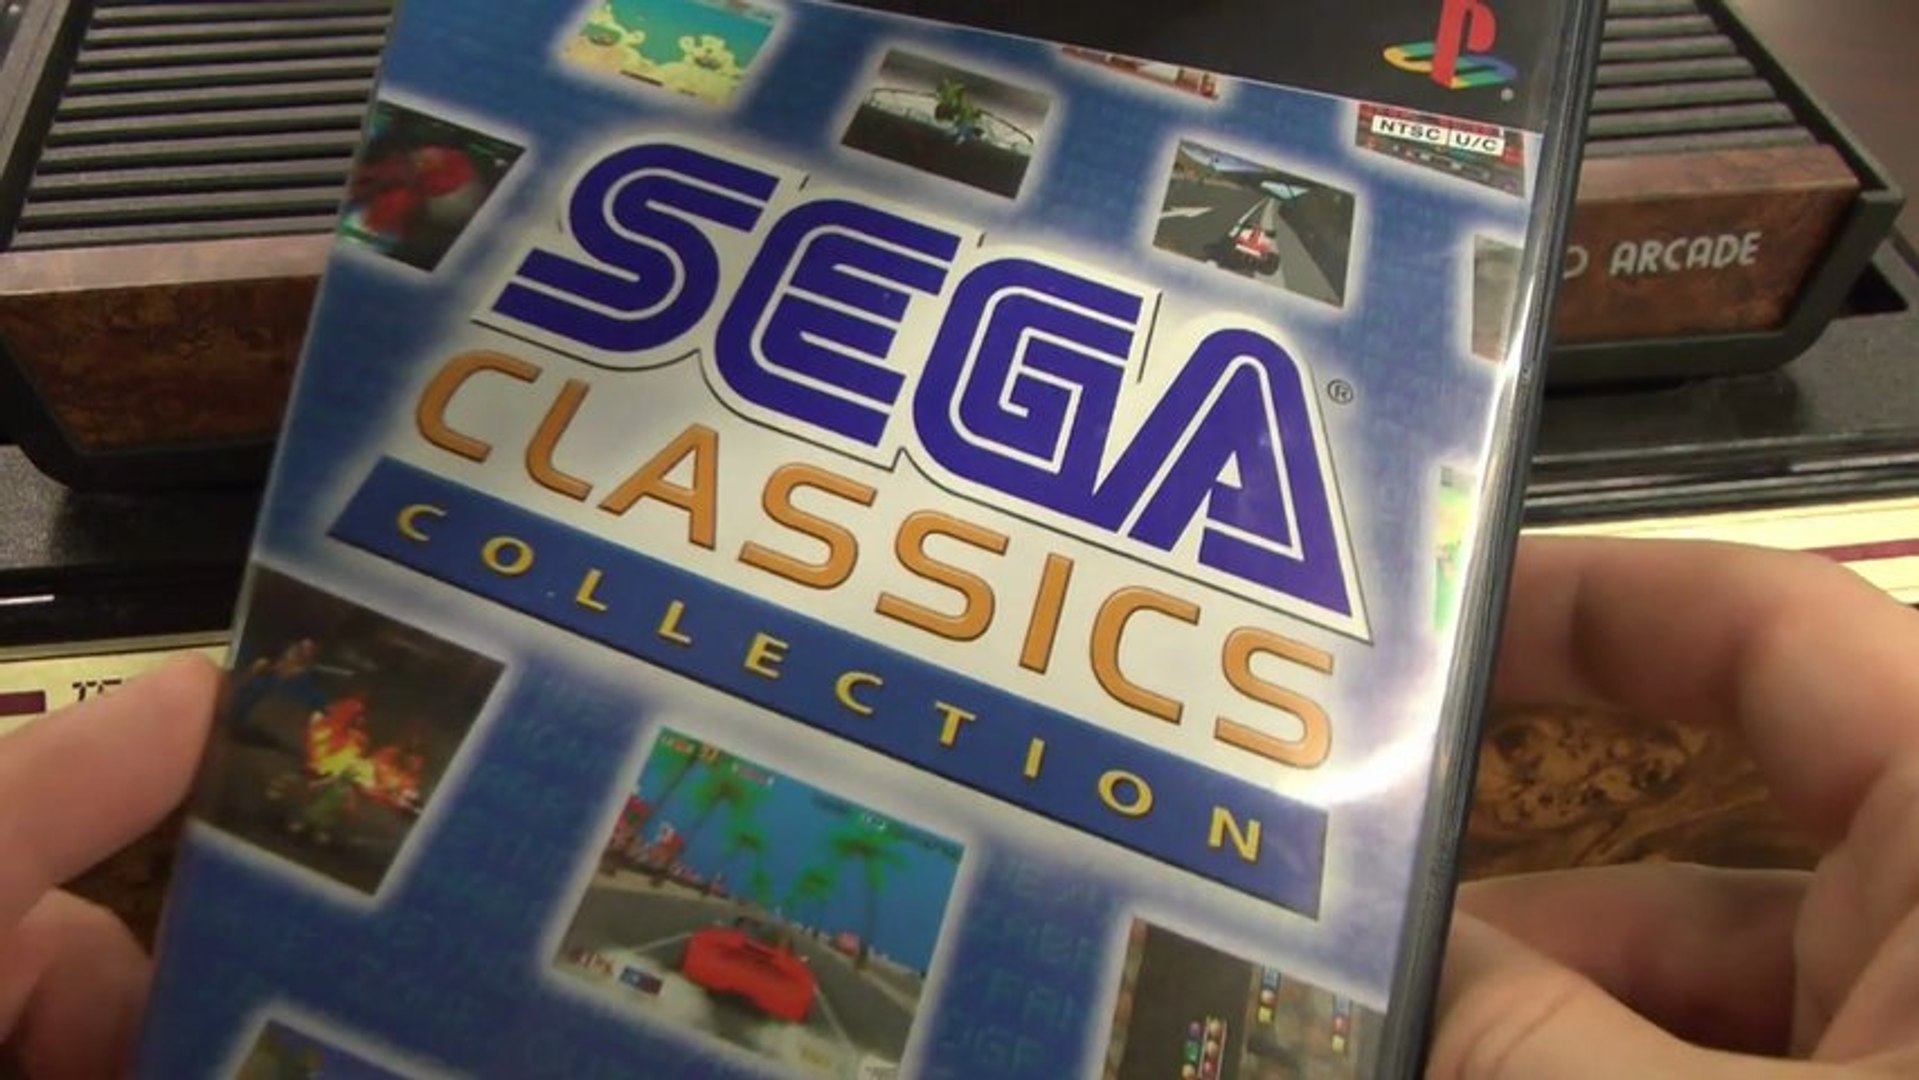 Collection ps2. Sega Classics collection ps2. Sega Genesis collection ps2. Sega Genesis Classic collection: Gold Edition. Сега Классик коллекшн пс2.